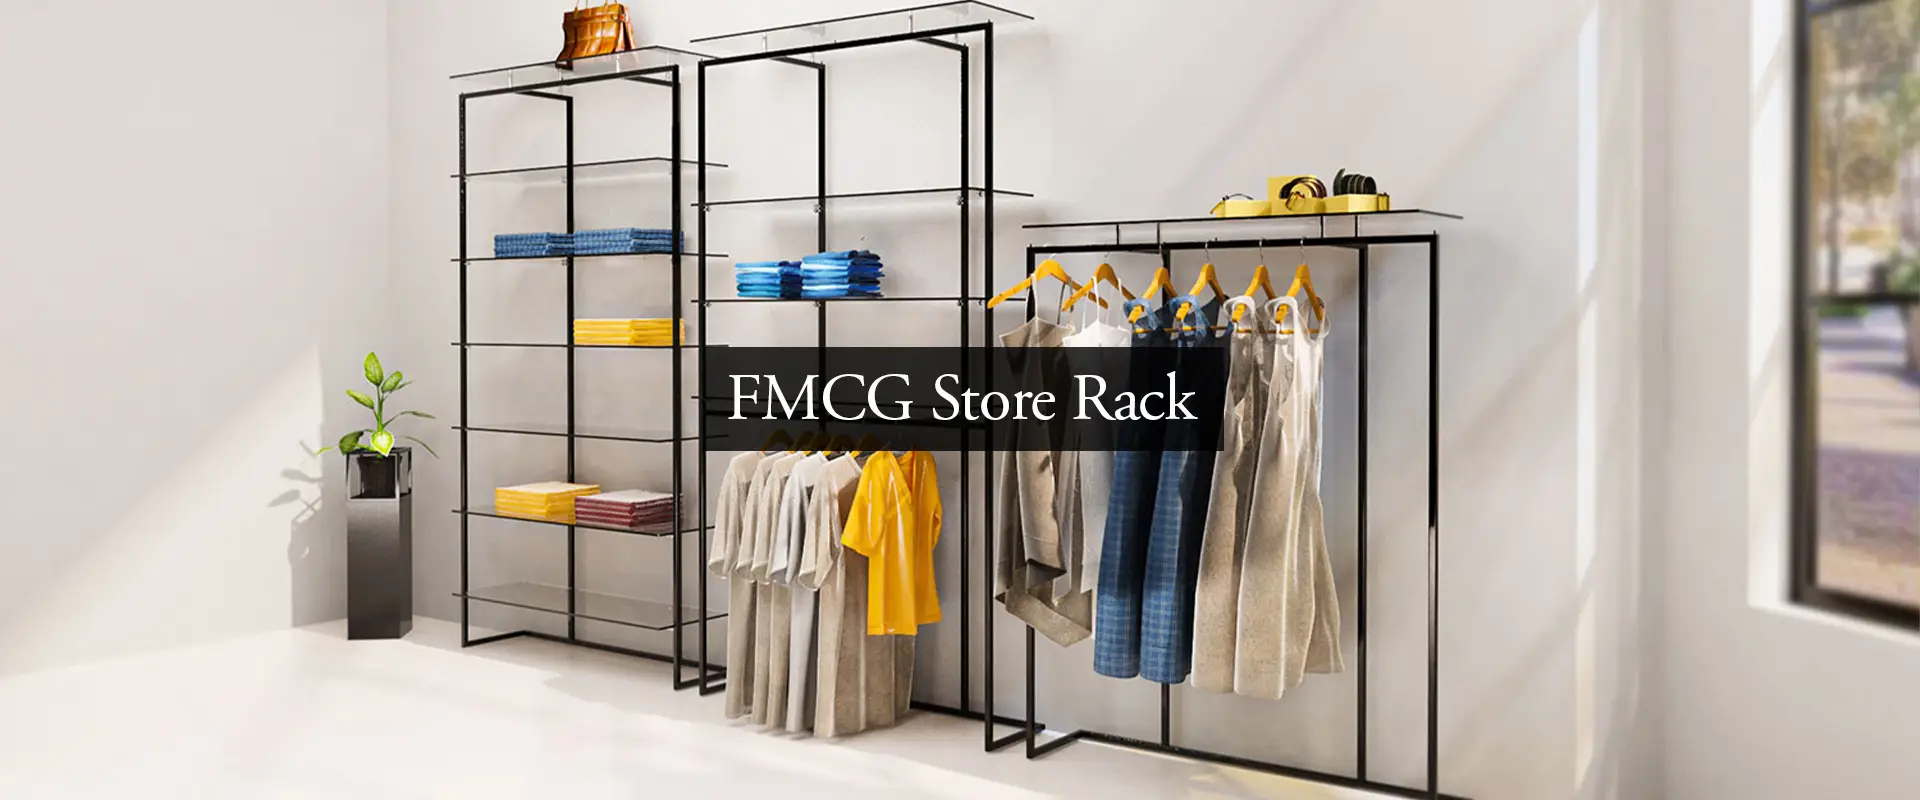 FMCG Store Rack